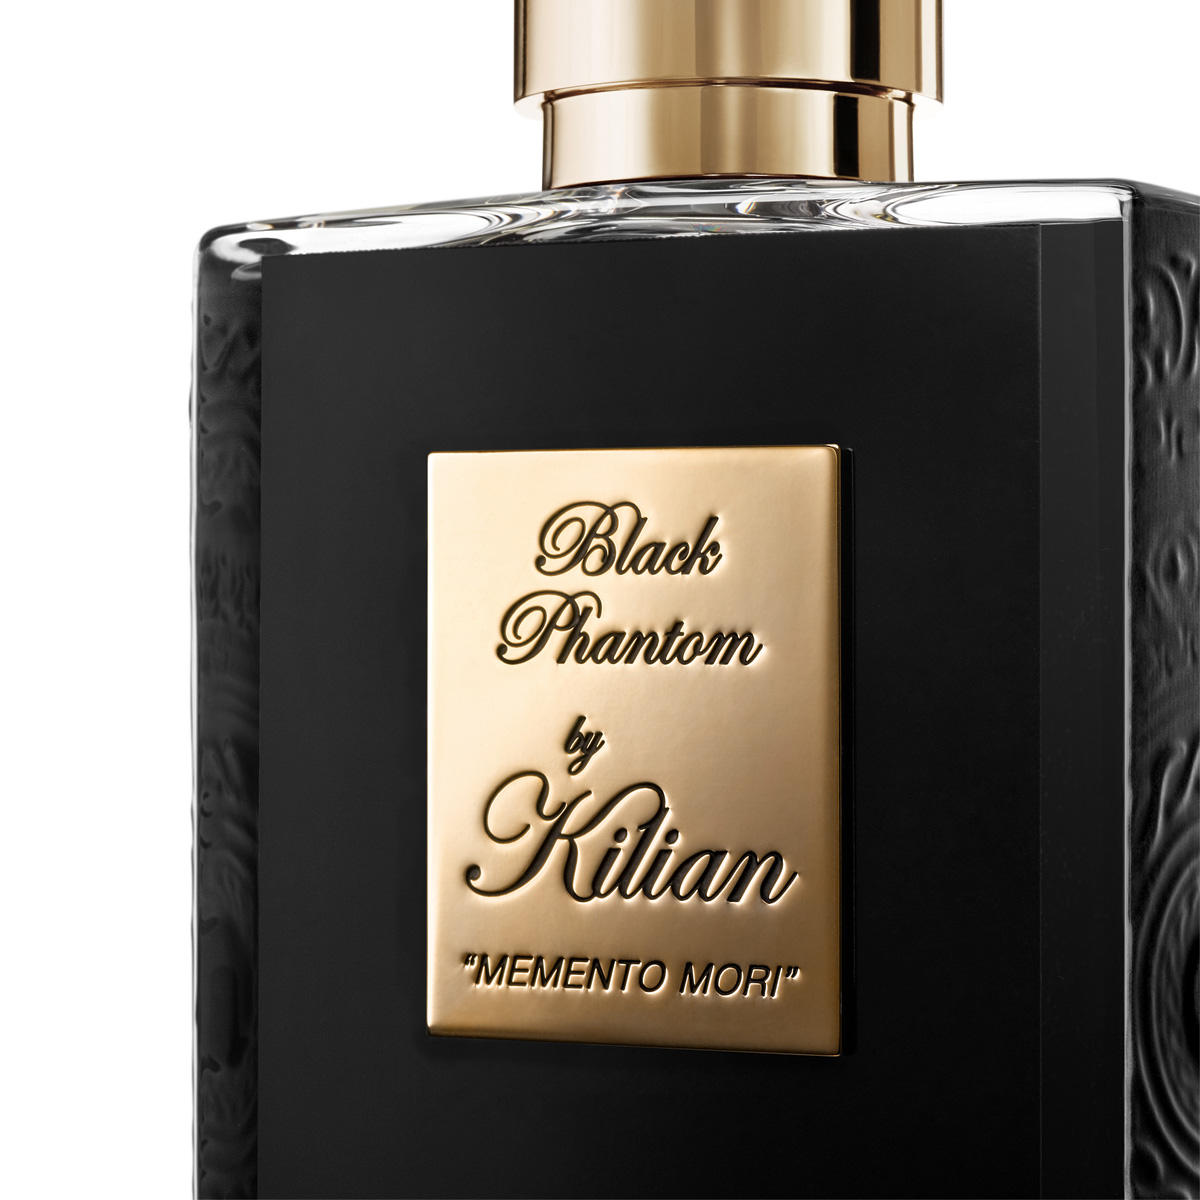 Kilian Paris Fragrance Black Phantom "Memento Mori" Eau de Parfum nachfüllbar 50 ml - 2